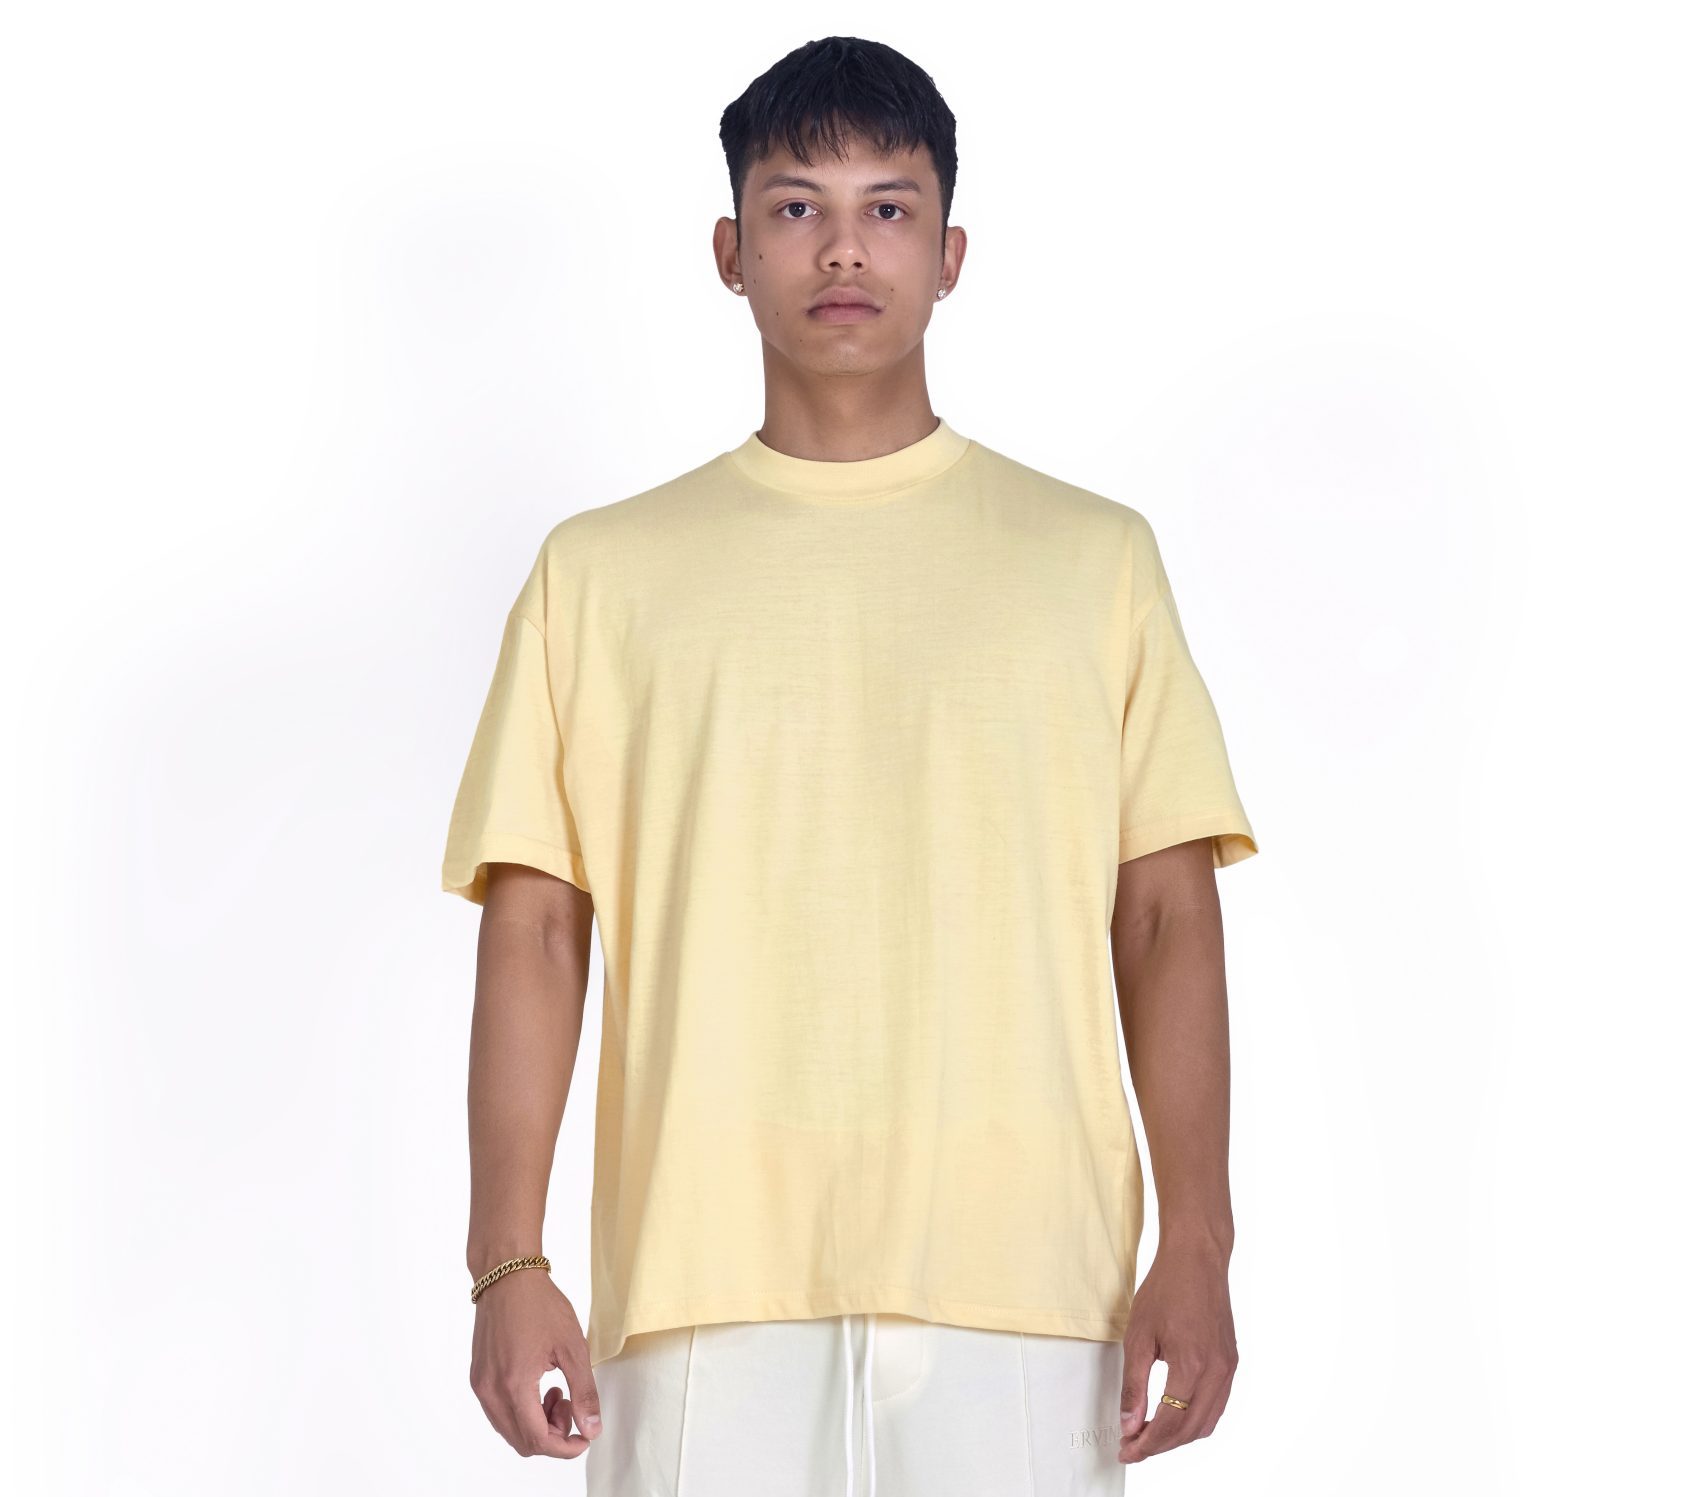 Drop shoulder t-shirt in pale yellow, 100% cotton fabric.